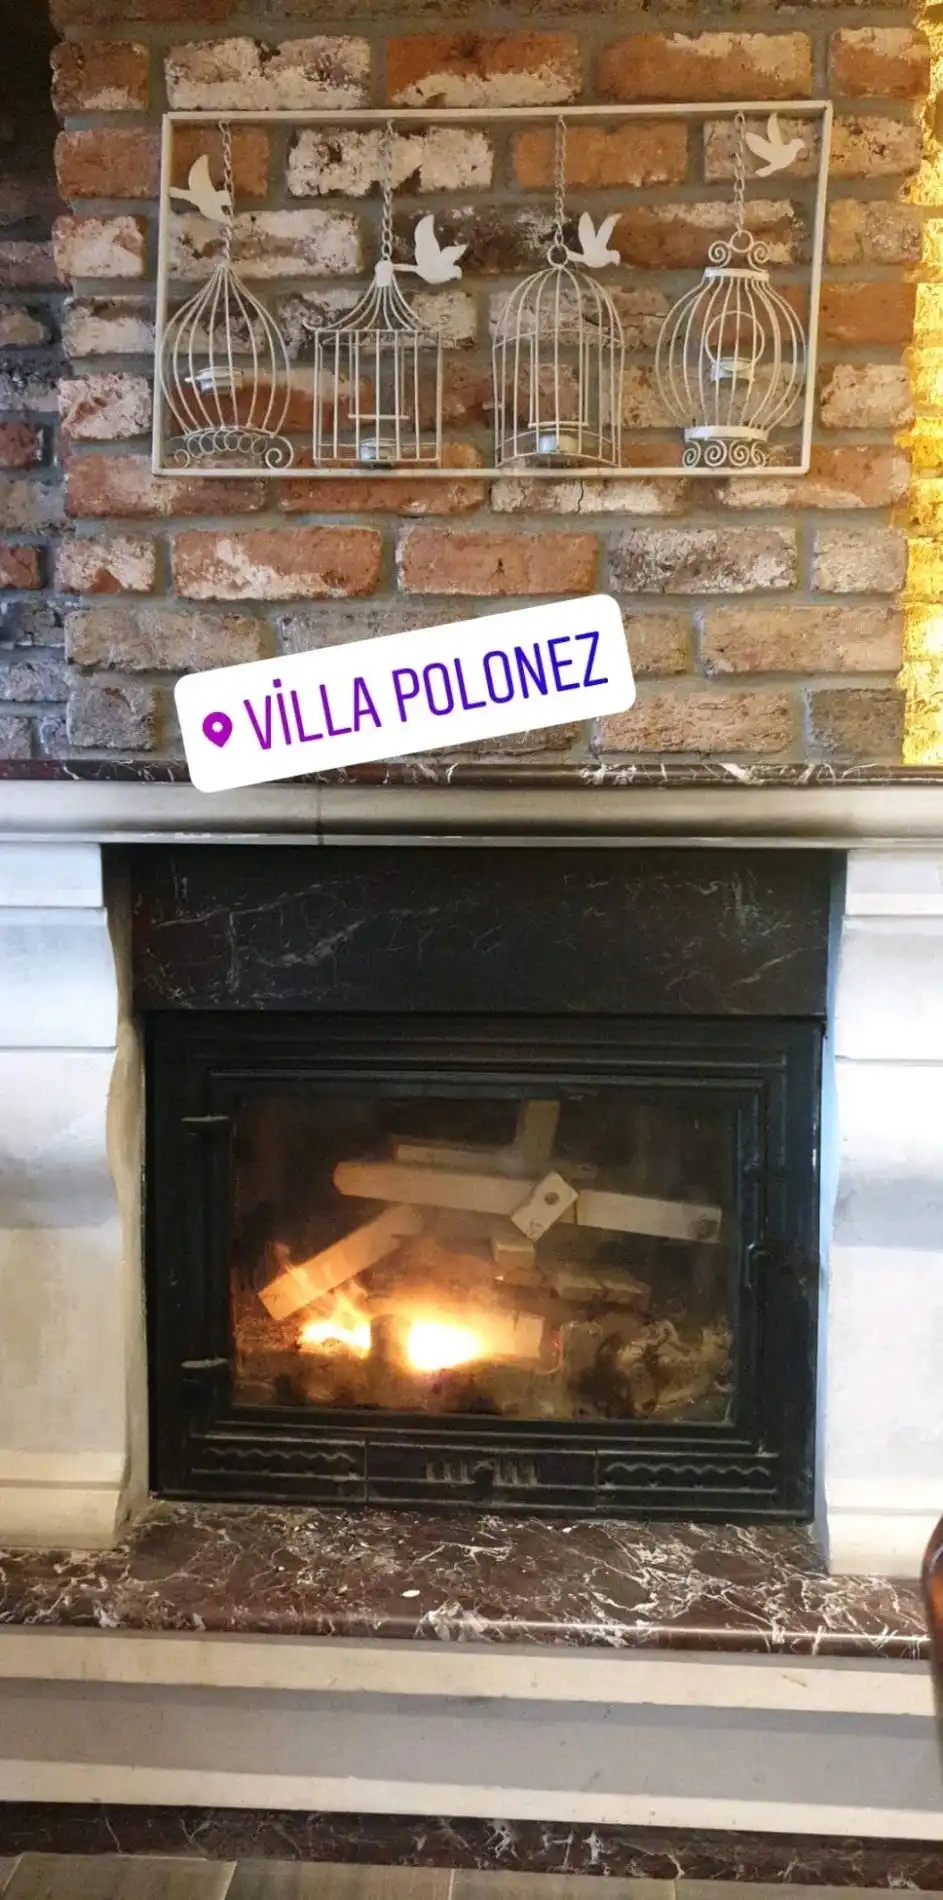 Villa Polonez Cafe & Restaurant